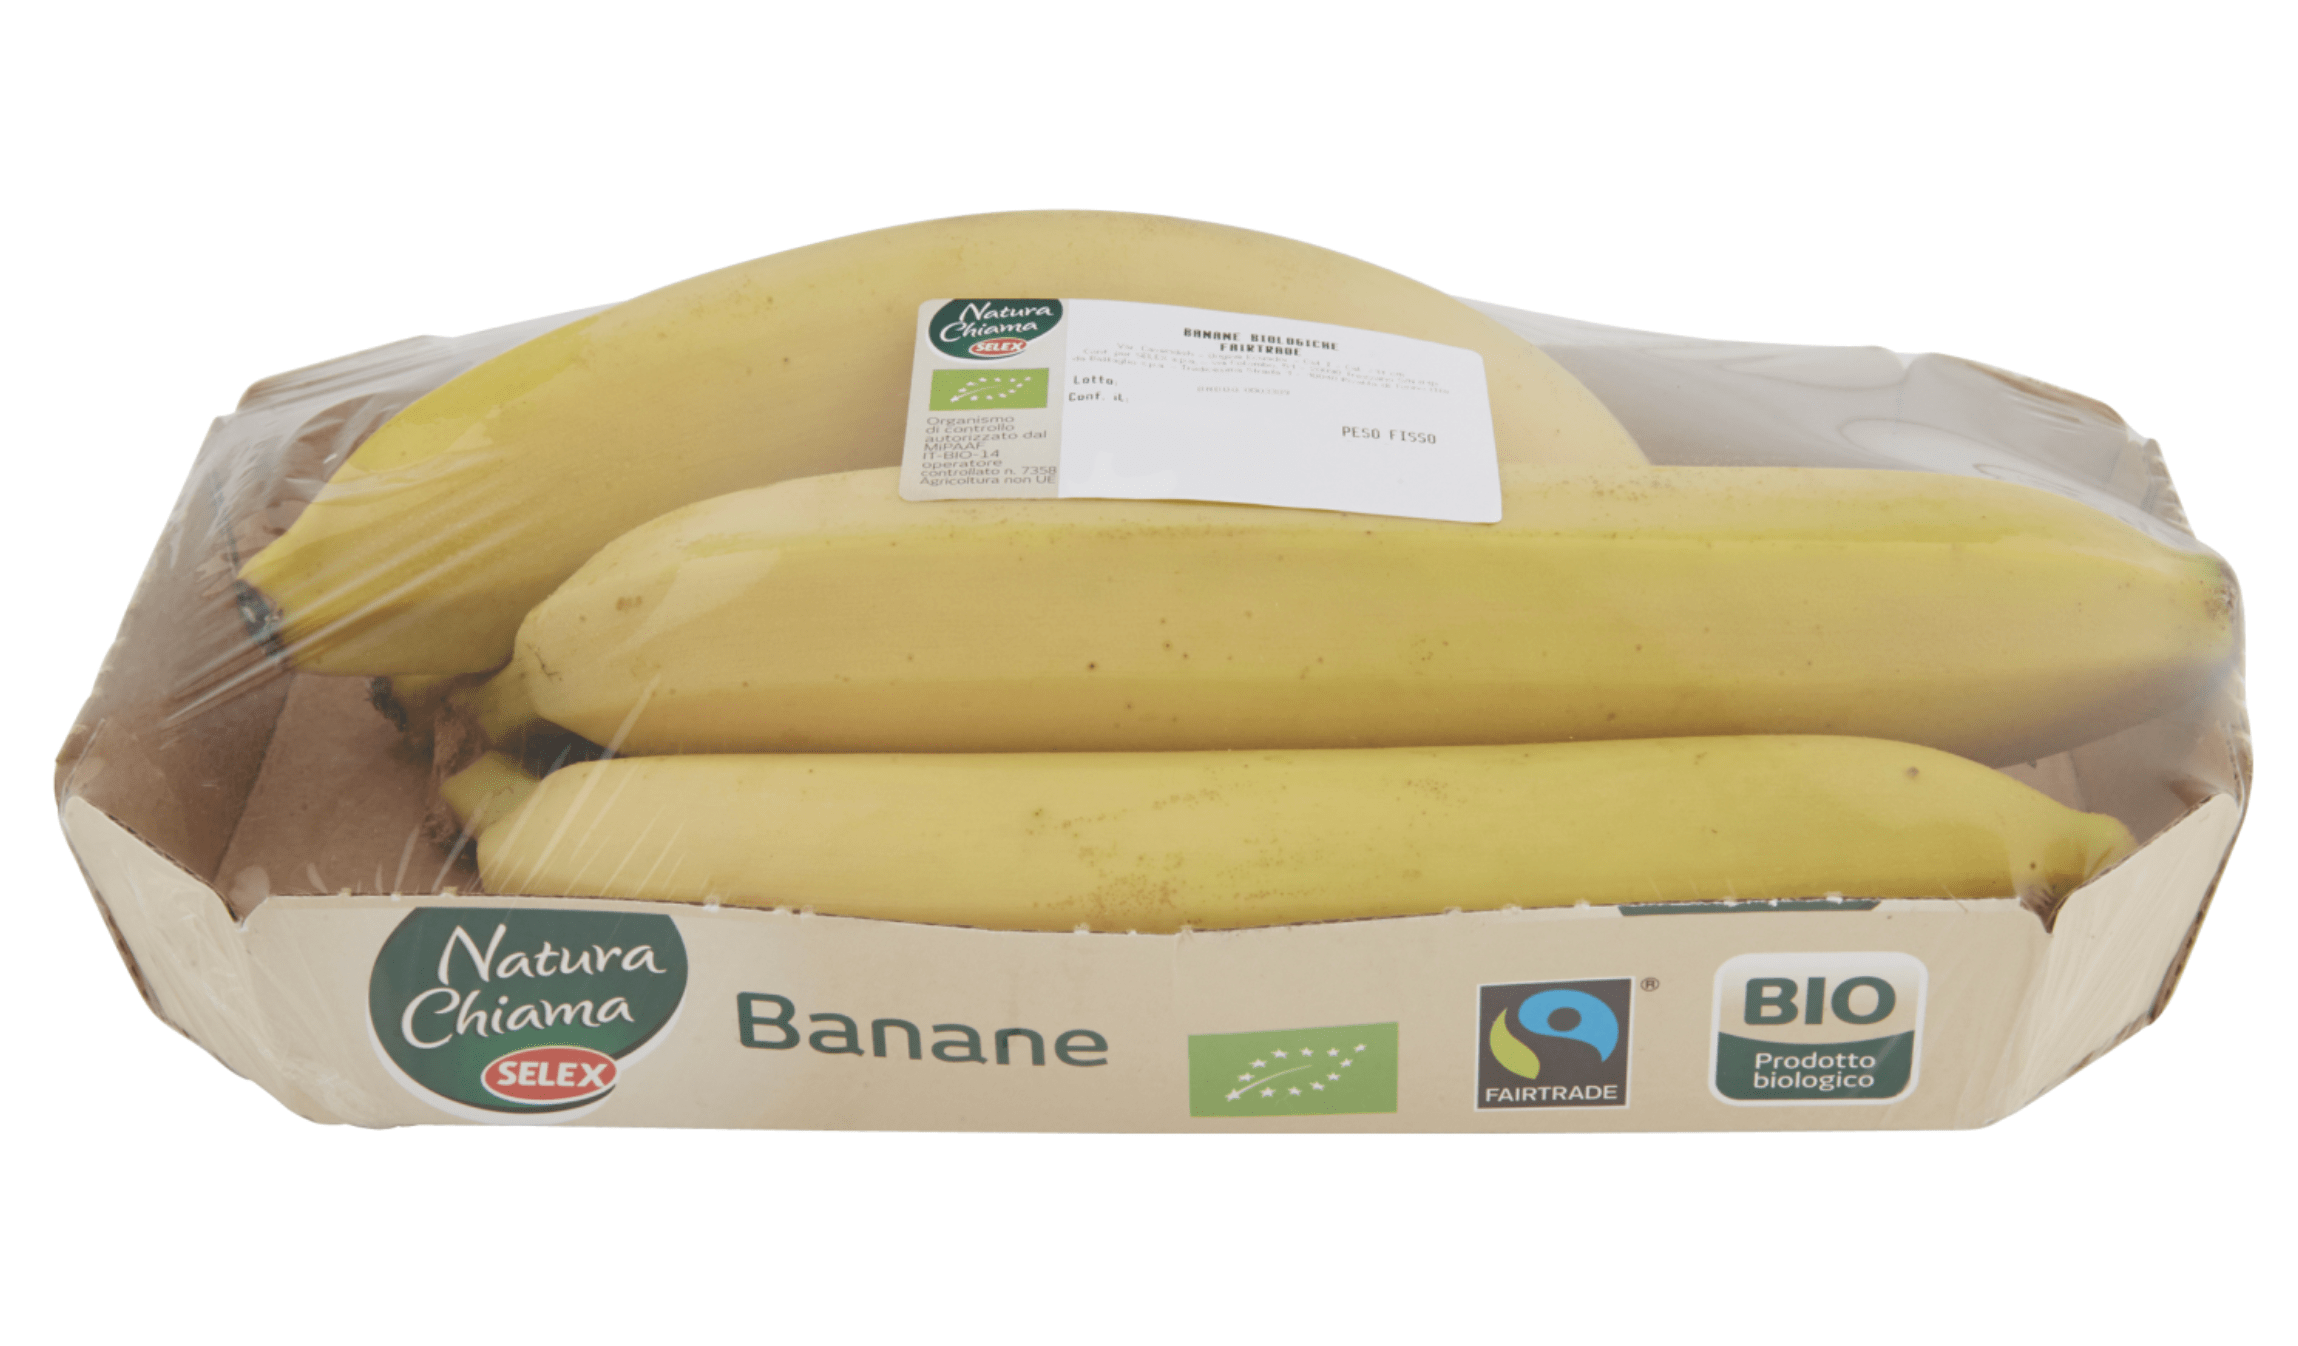 banane biologiche certificate Fairtrade in vassoio.